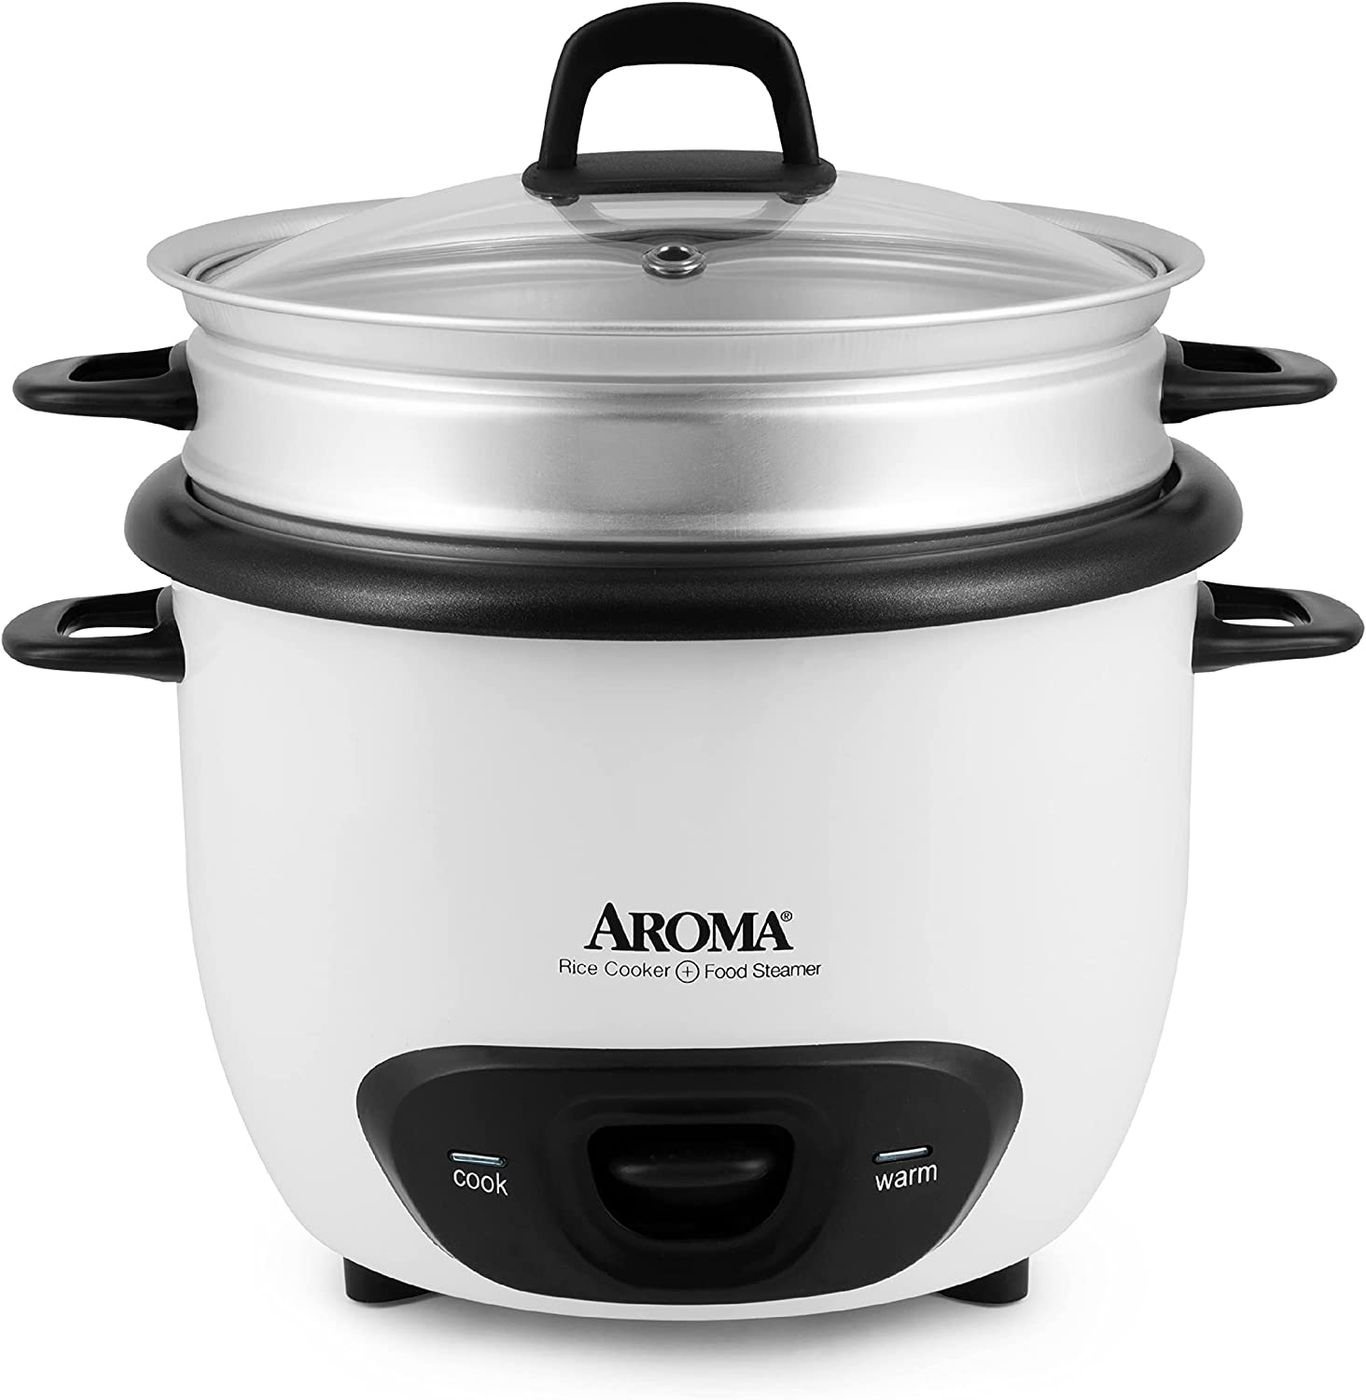 https://www.telemundo.com/sites/nbcutelemundo/files/2022/04/aroma_housewares_pot_style_rice_cooker_and_food_steamer.jpeg